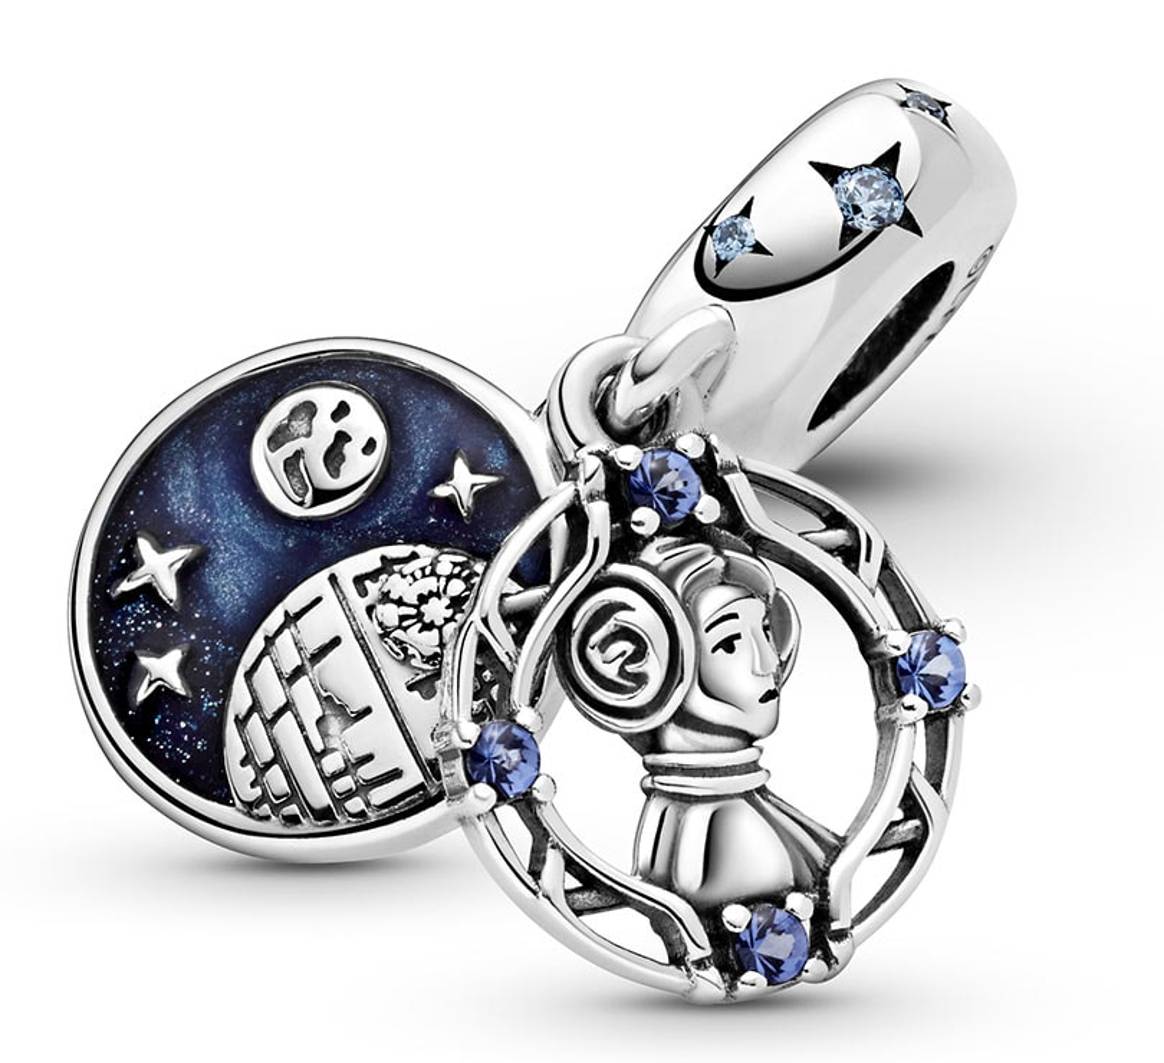 Pandora unveils Star Wars jewellery collection